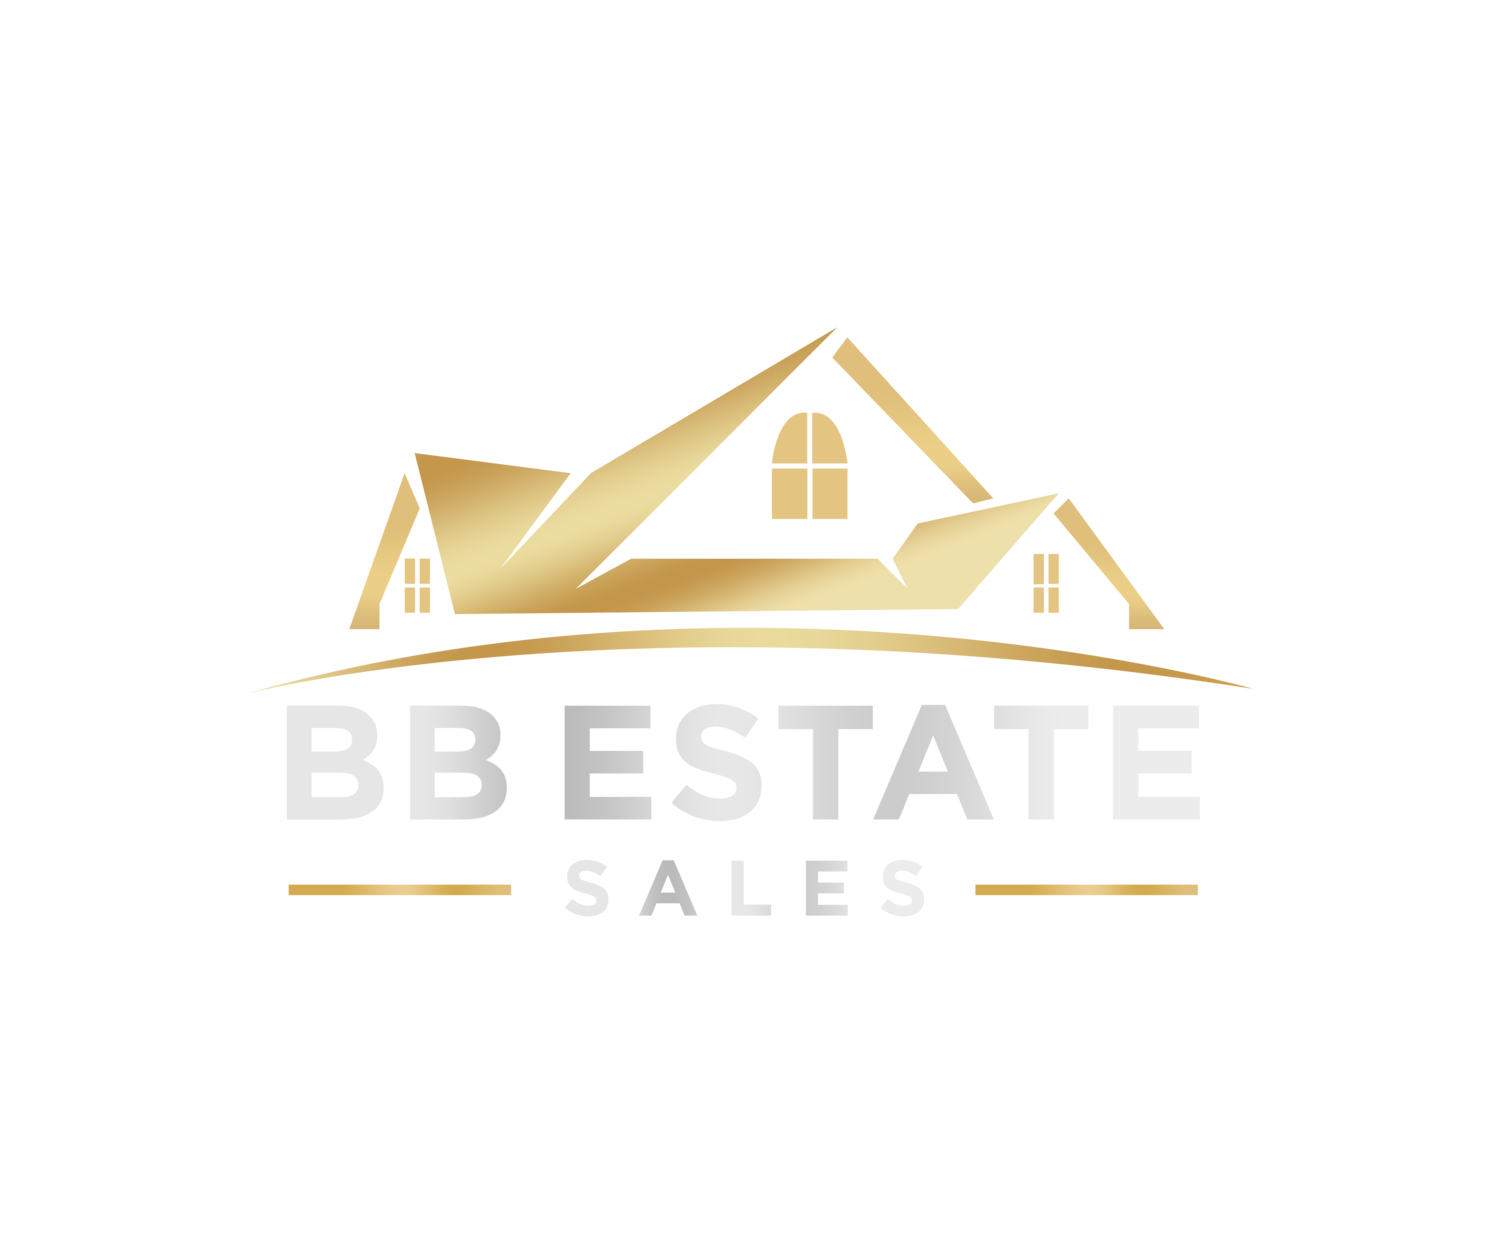 BB Estate Sales